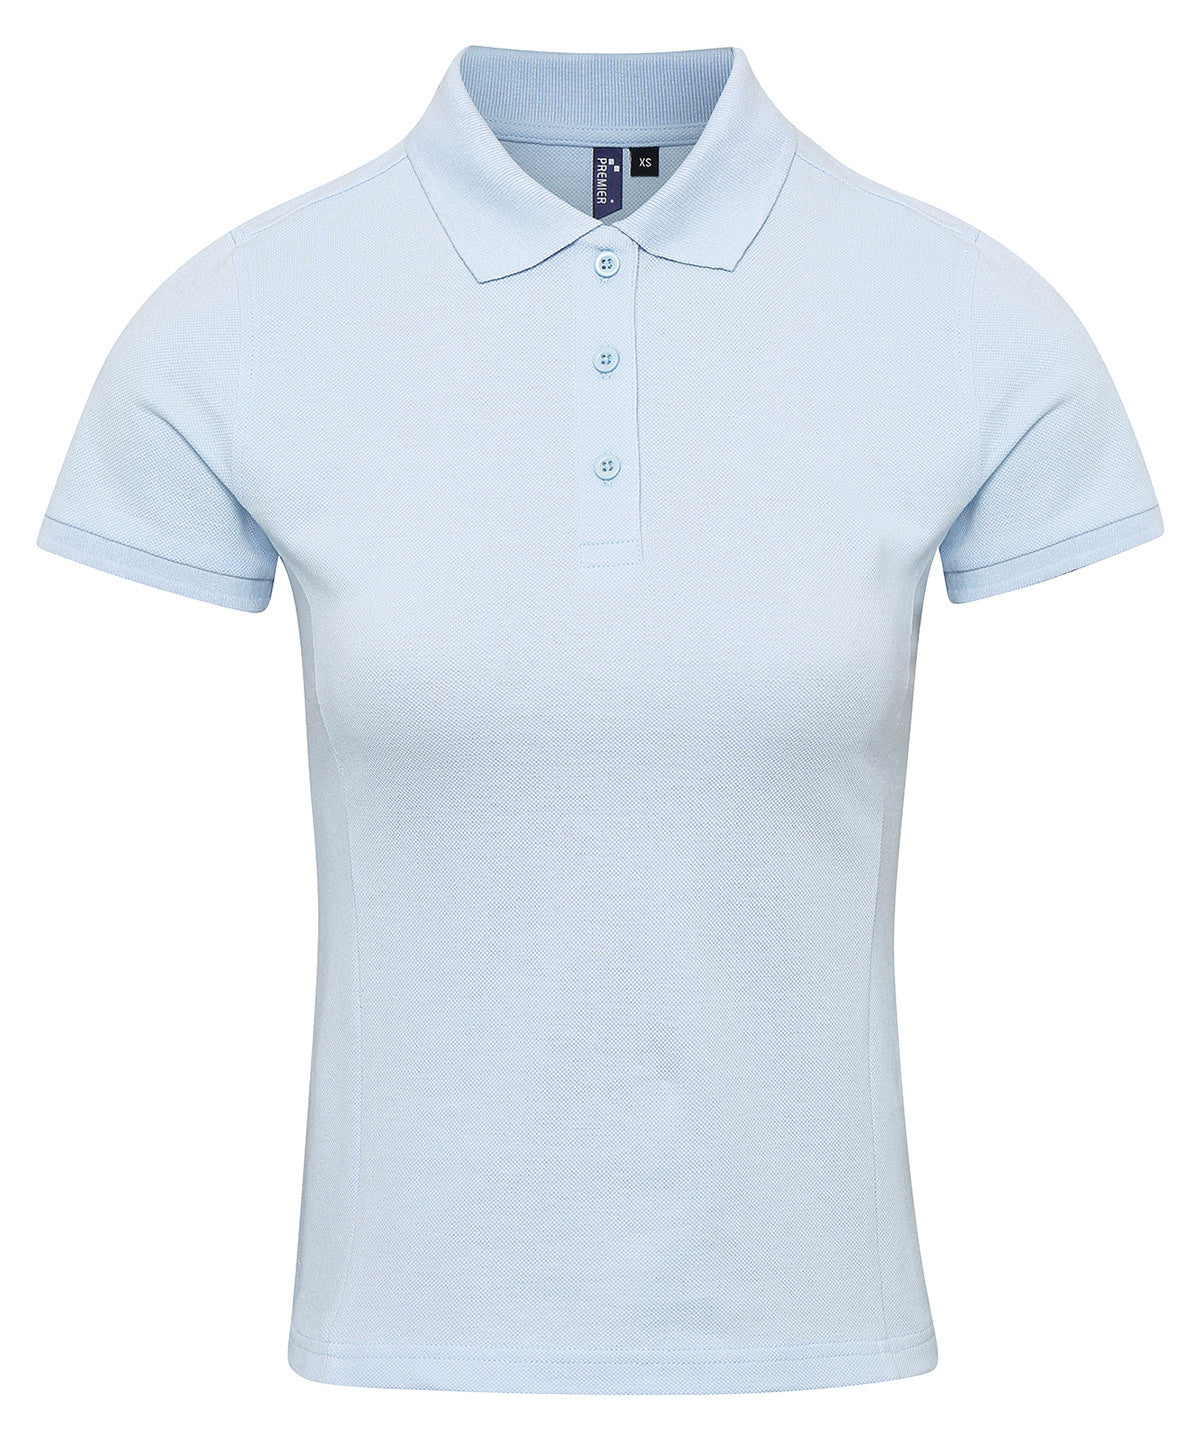 Personalised Polo Shirts - Black Premier Women's Coolchecker® plus piqué polo